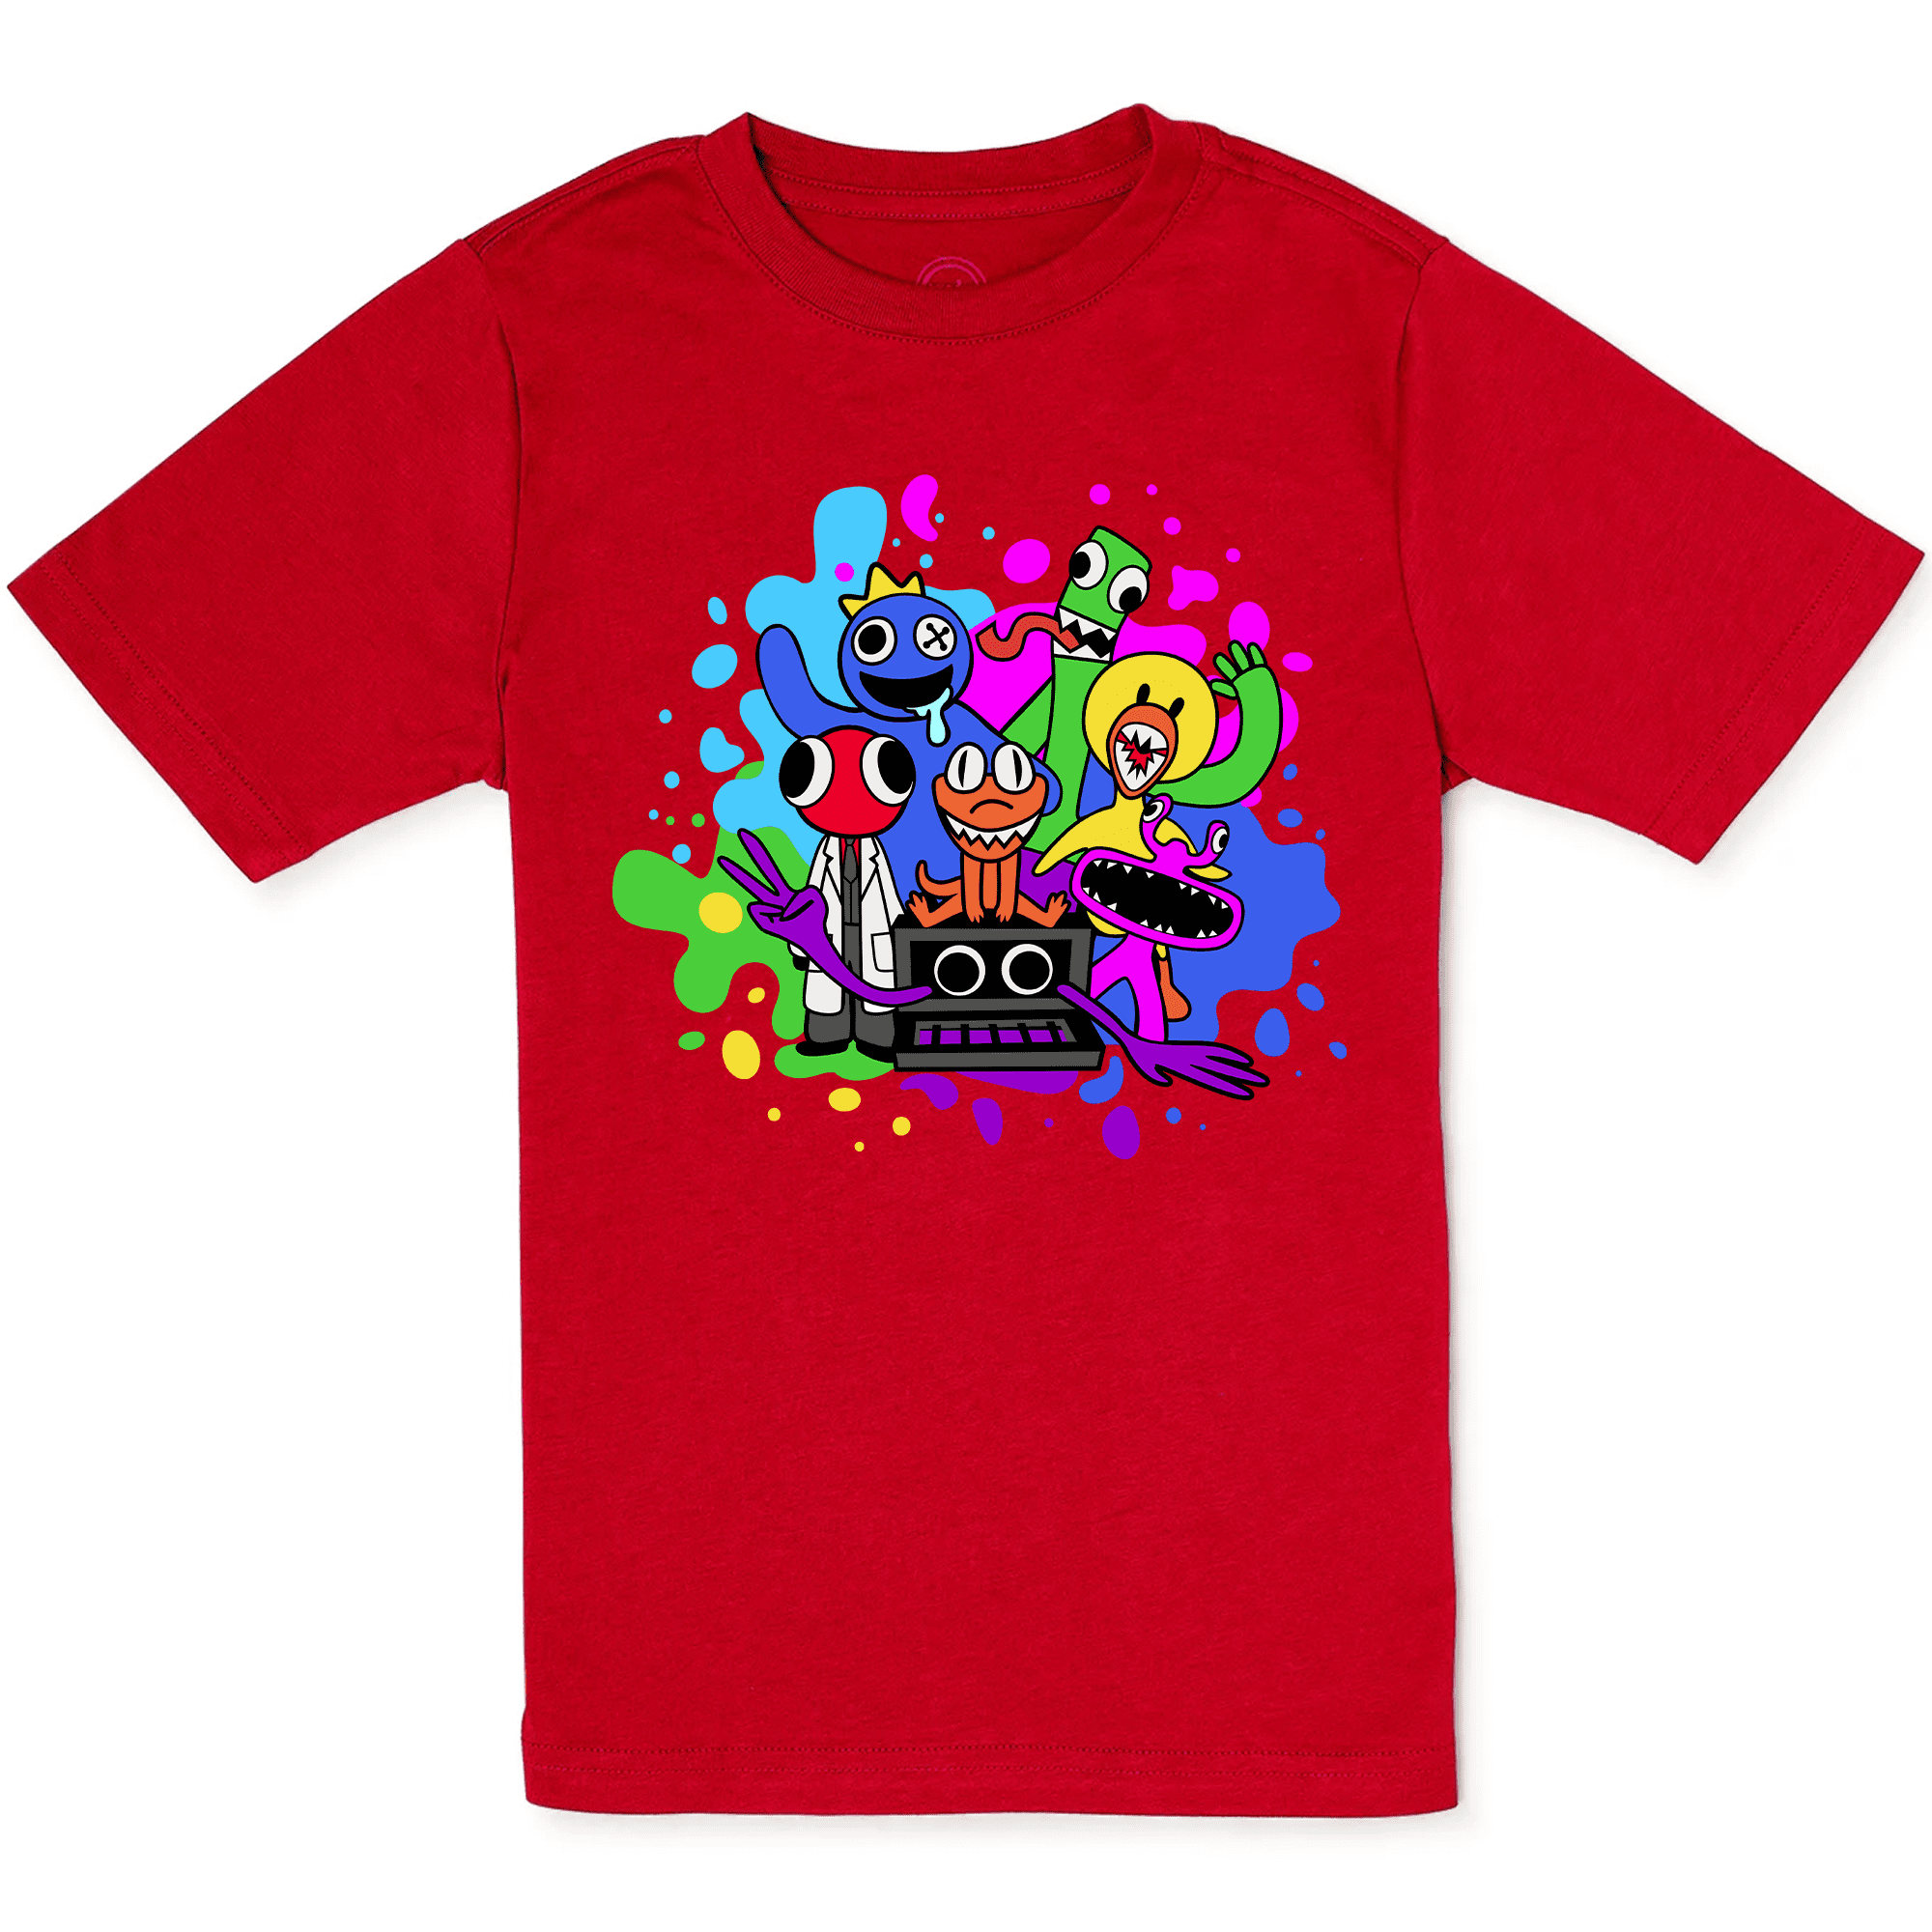 7-14 Years Kids Roblox Rainbow Friends Short Sleeve T-shirt Top